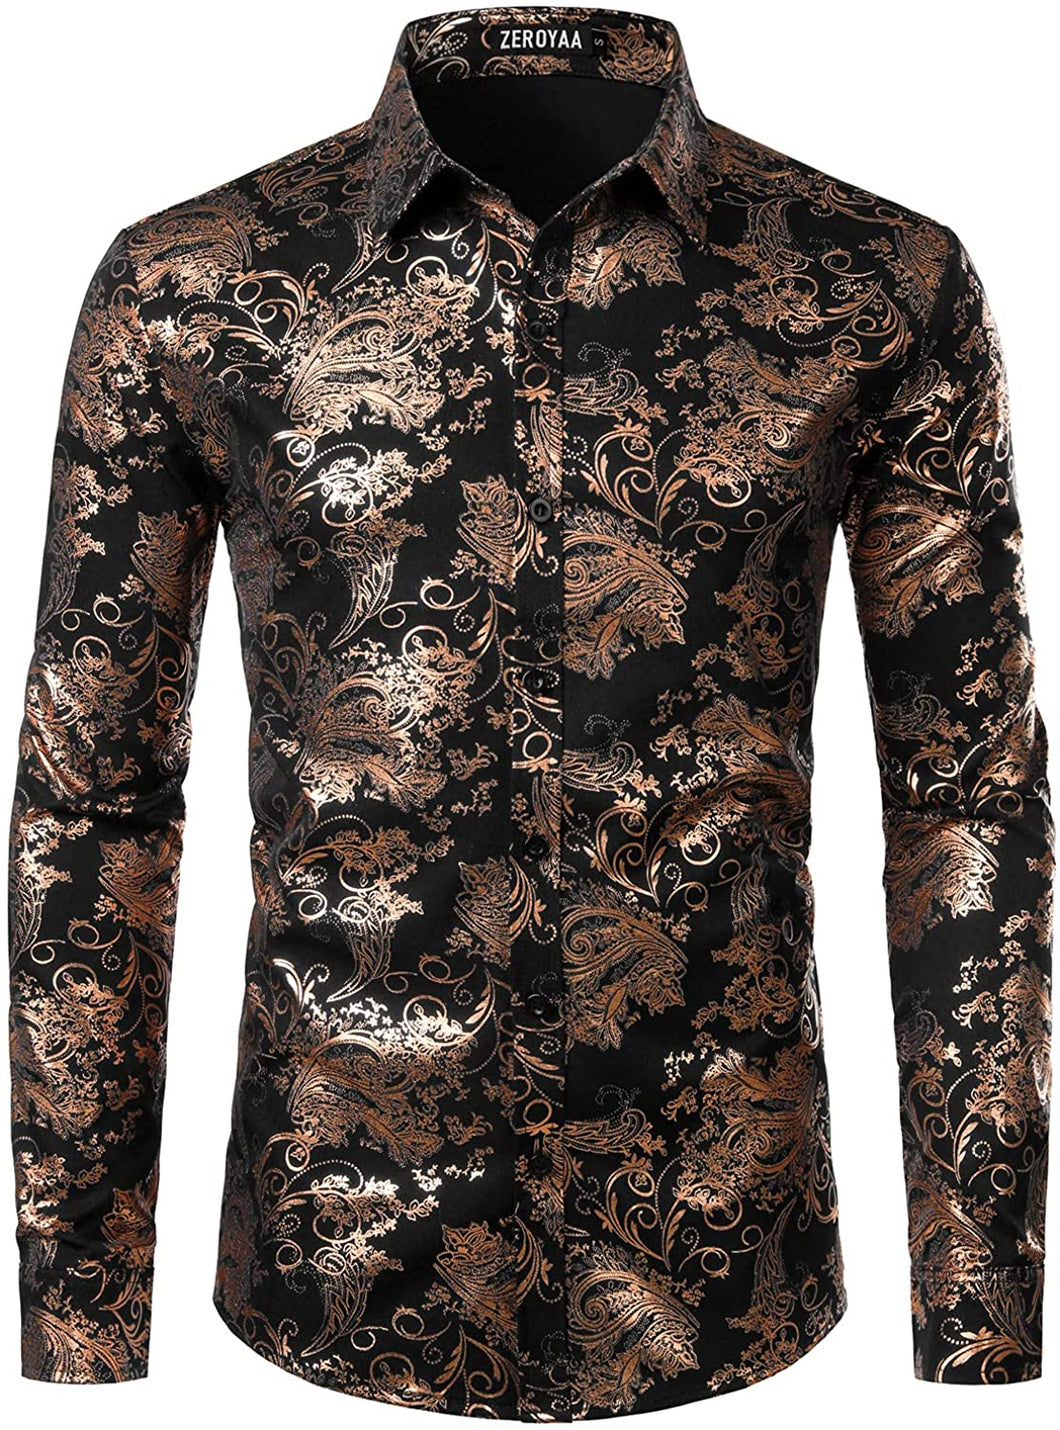 Men's Long Sleeve Black Bronze Paisley Printed Dress Shirt